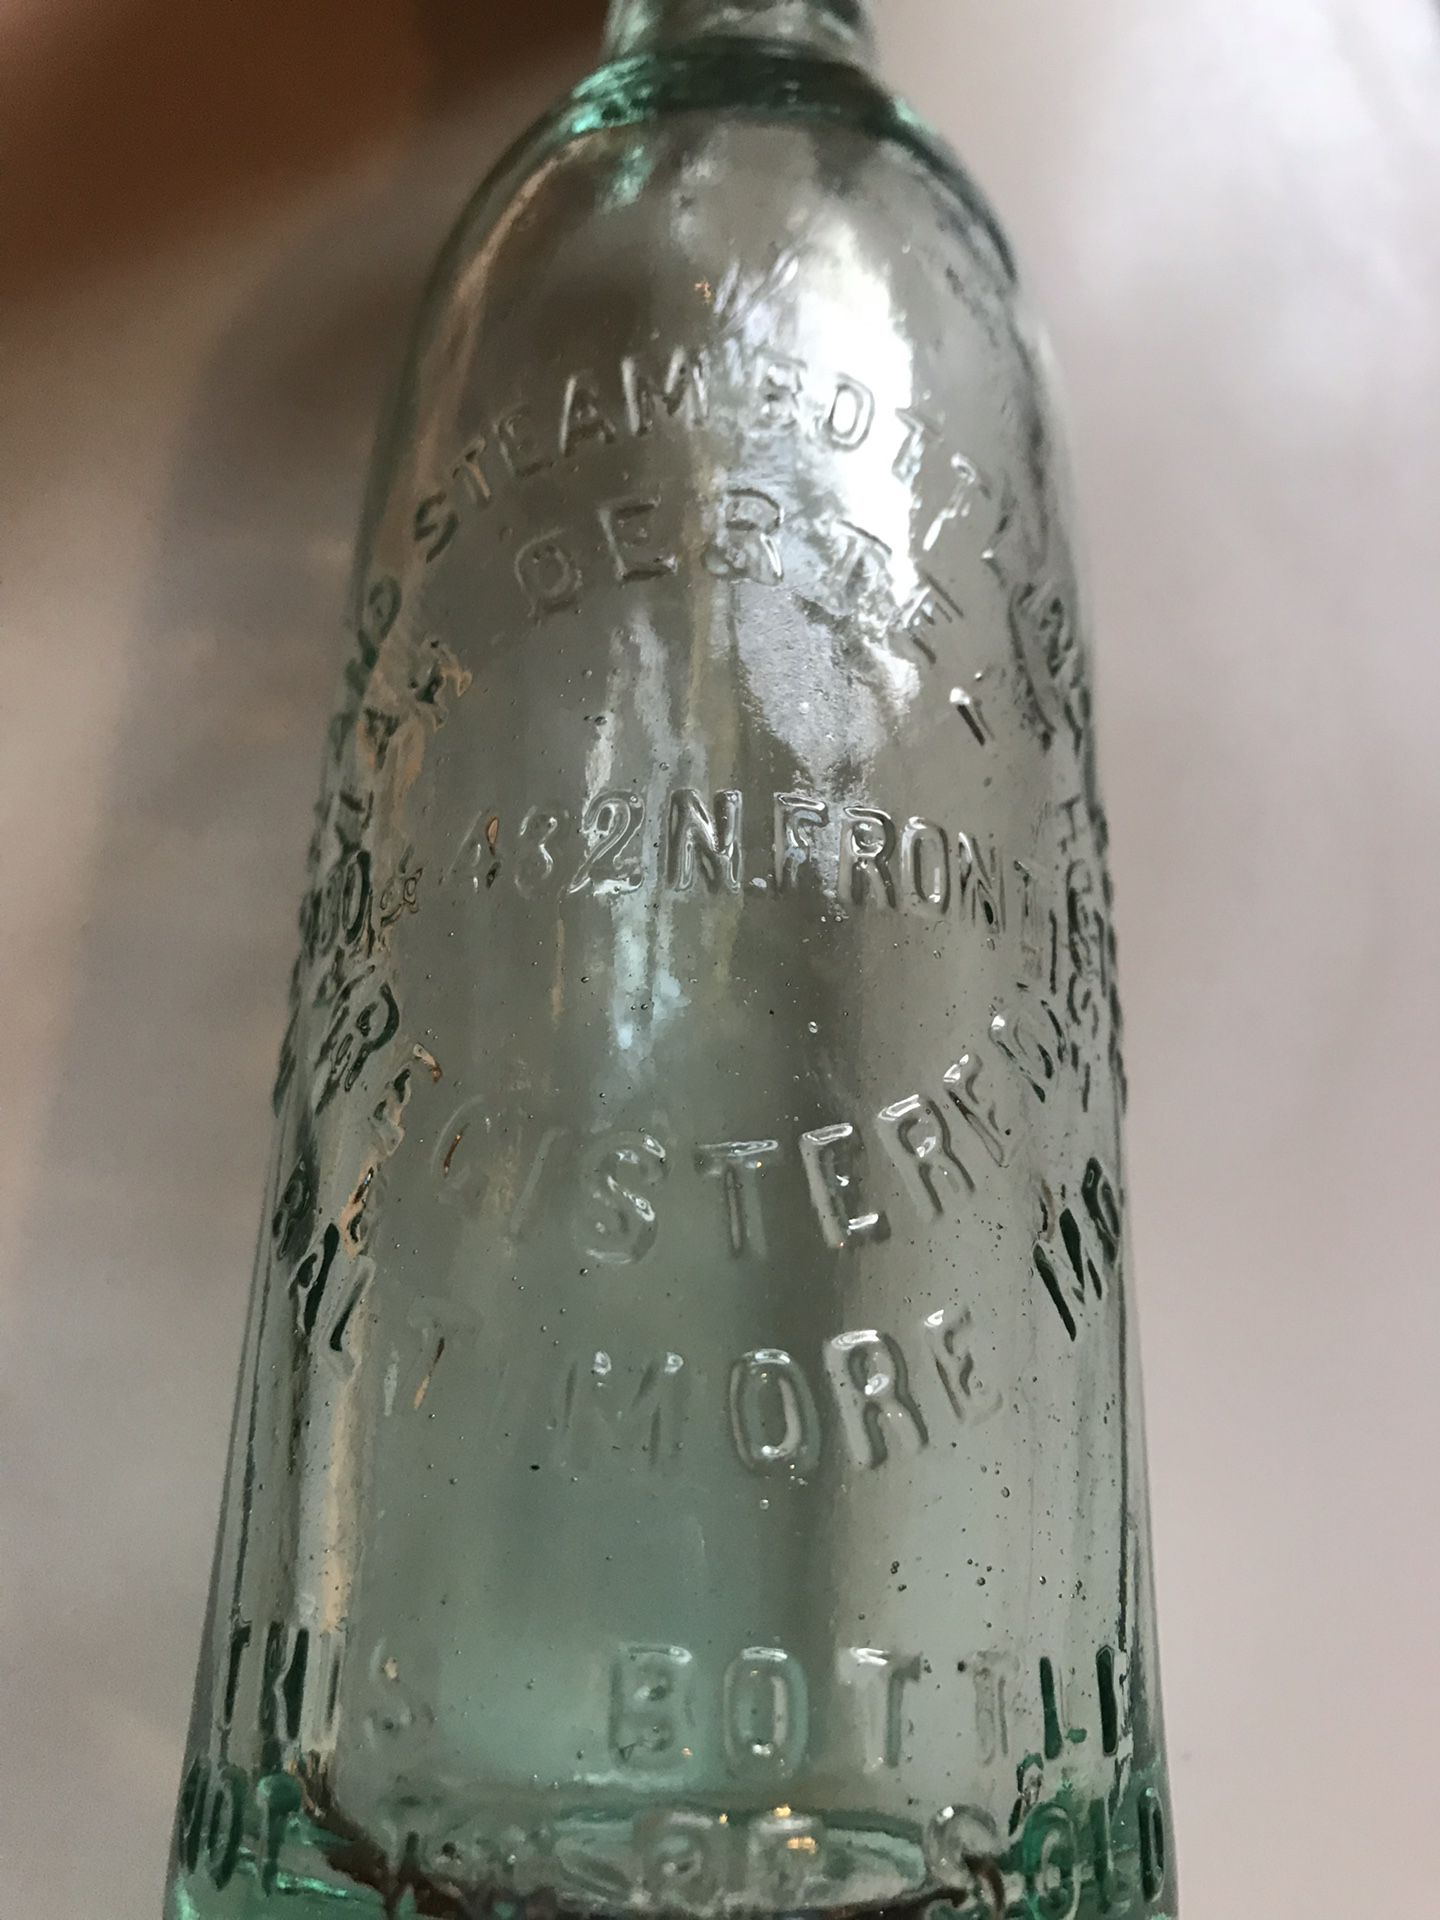 Rare Baltimore glass bottle